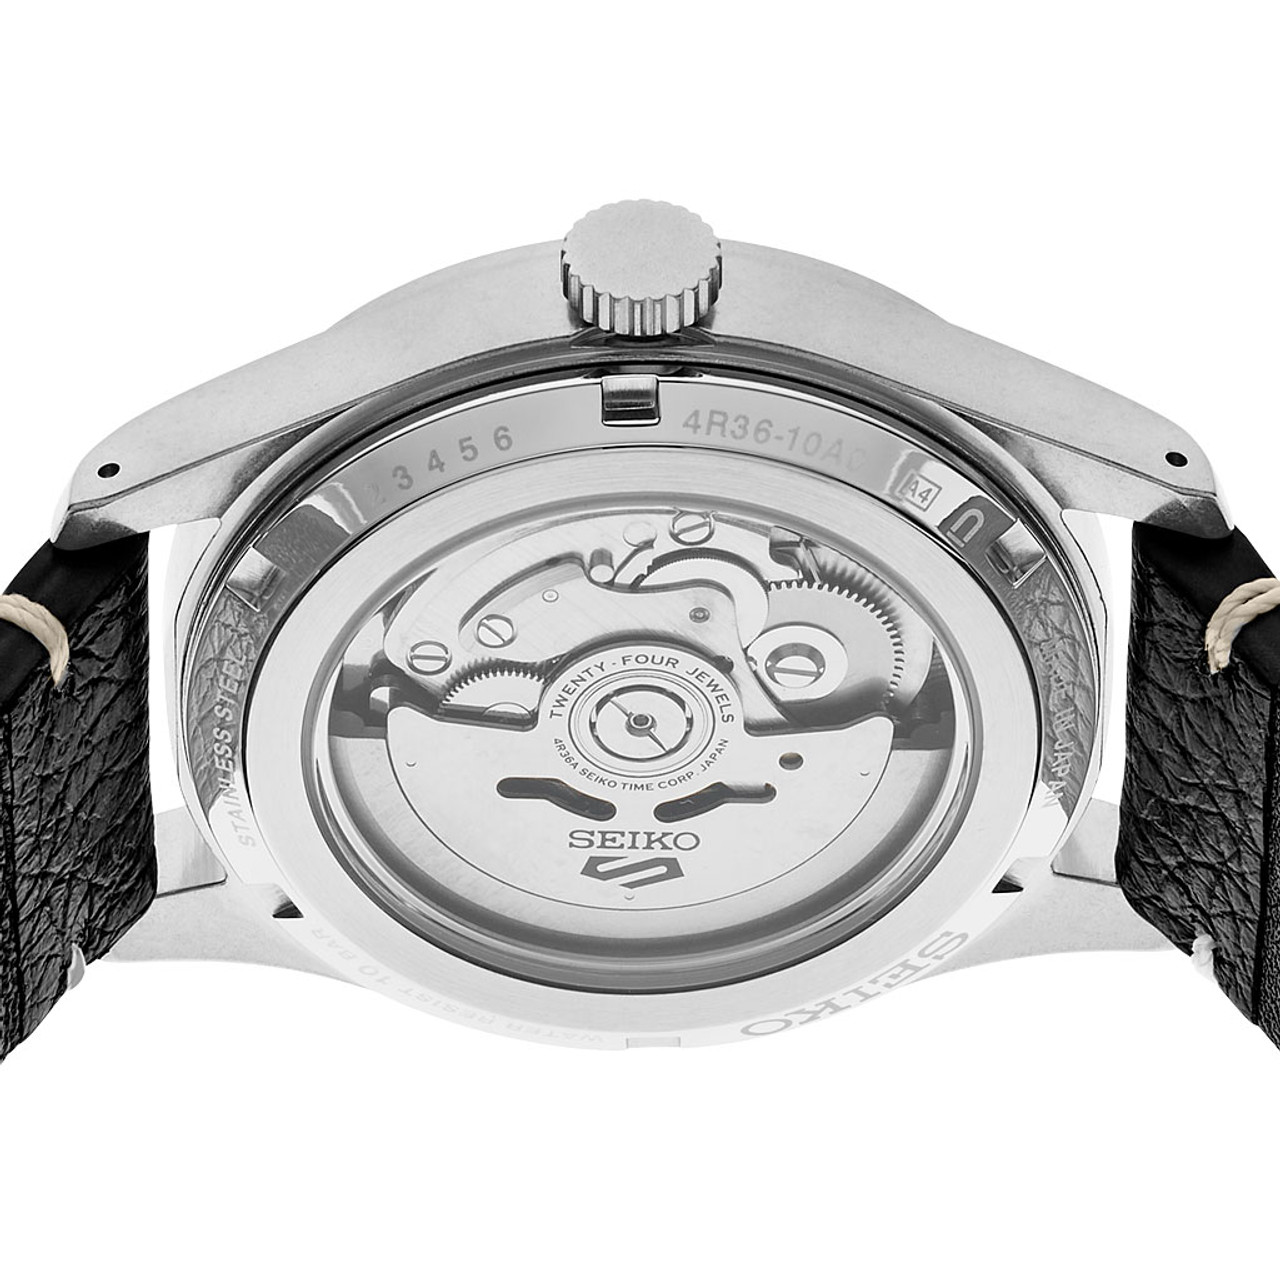 Seiko 5 Sports 24-Jewel Automatic Watch with Dark Blue Dial #SRPG39